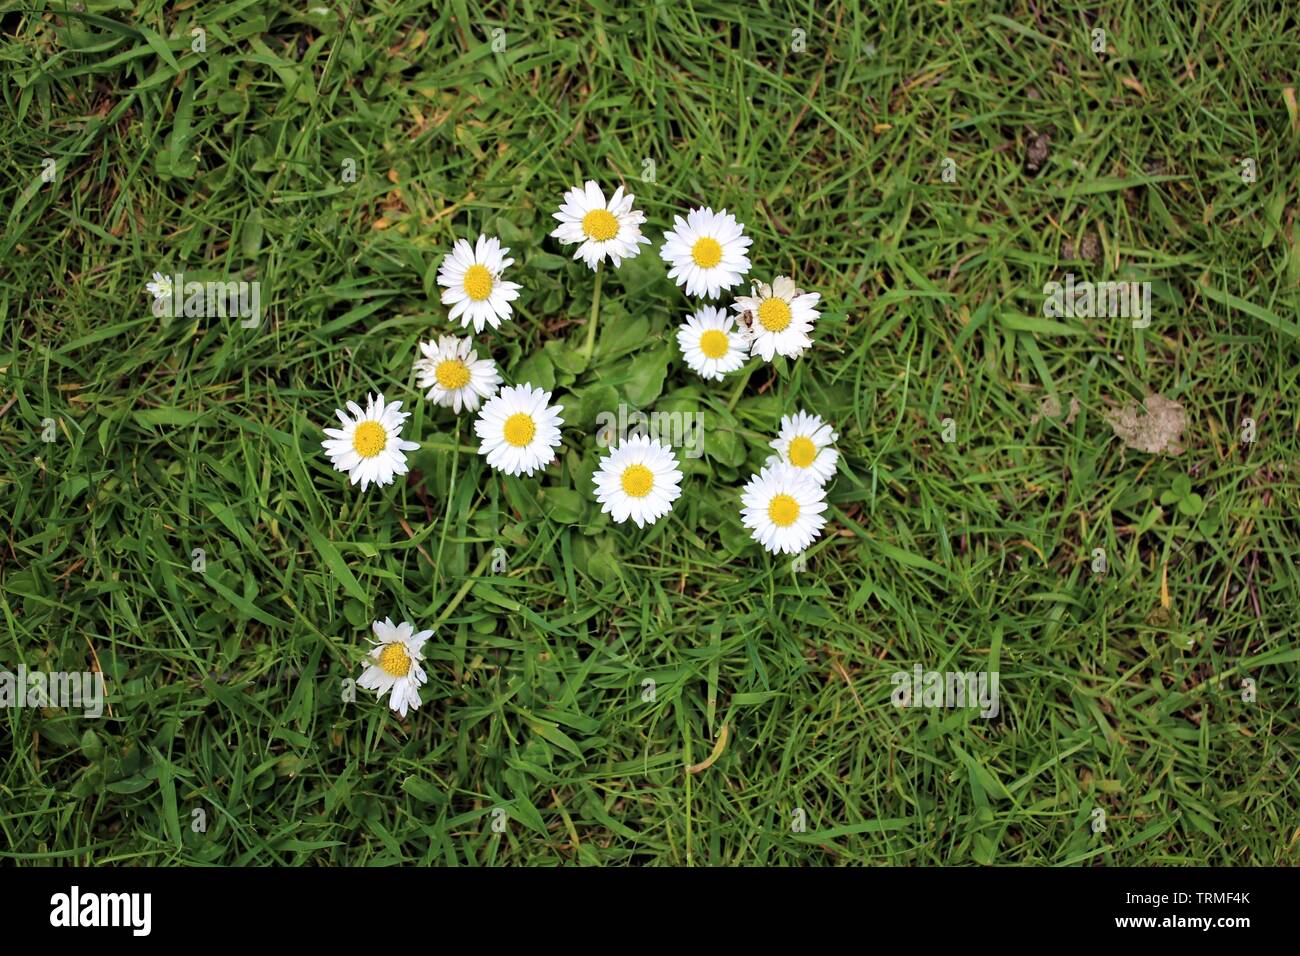 Daisy's in grass Stock Photo